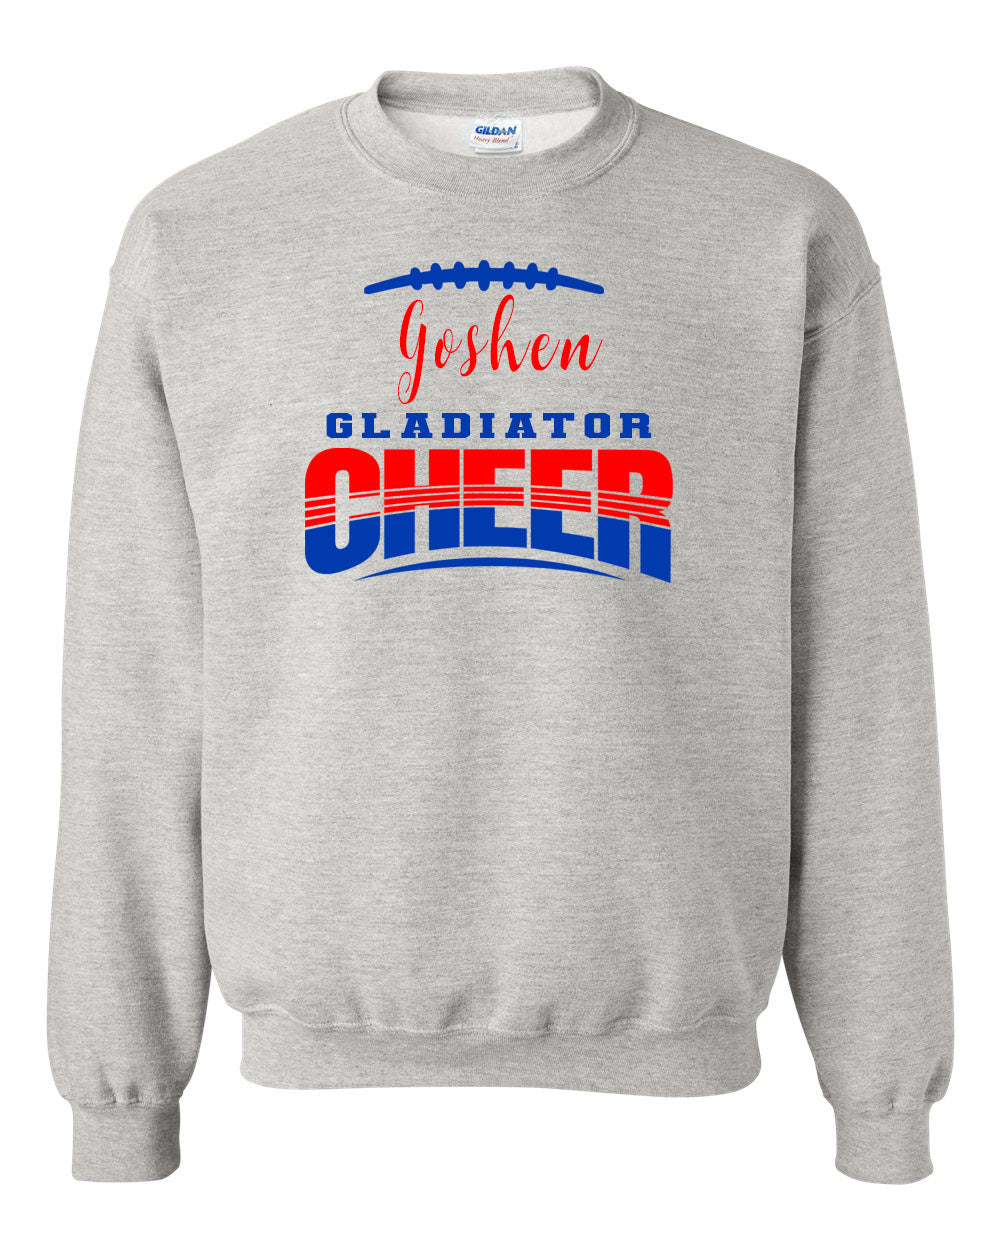 Goshen non hooded sweatshirt design 2